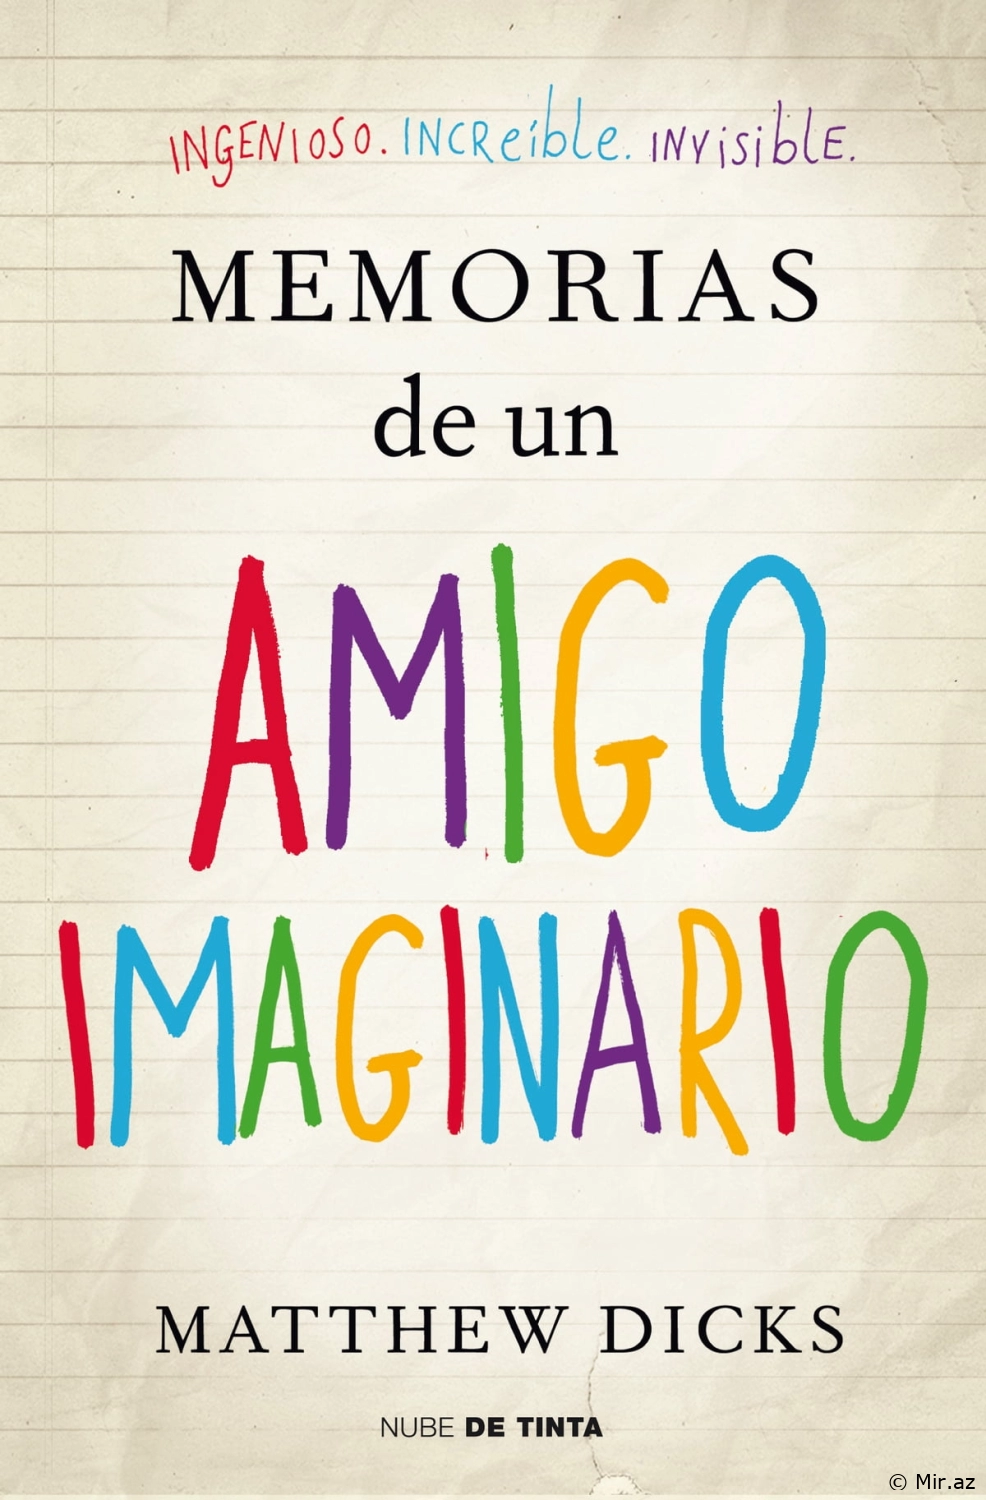 Matthew Dicks "Memorias de un amigo imaginario" PDF